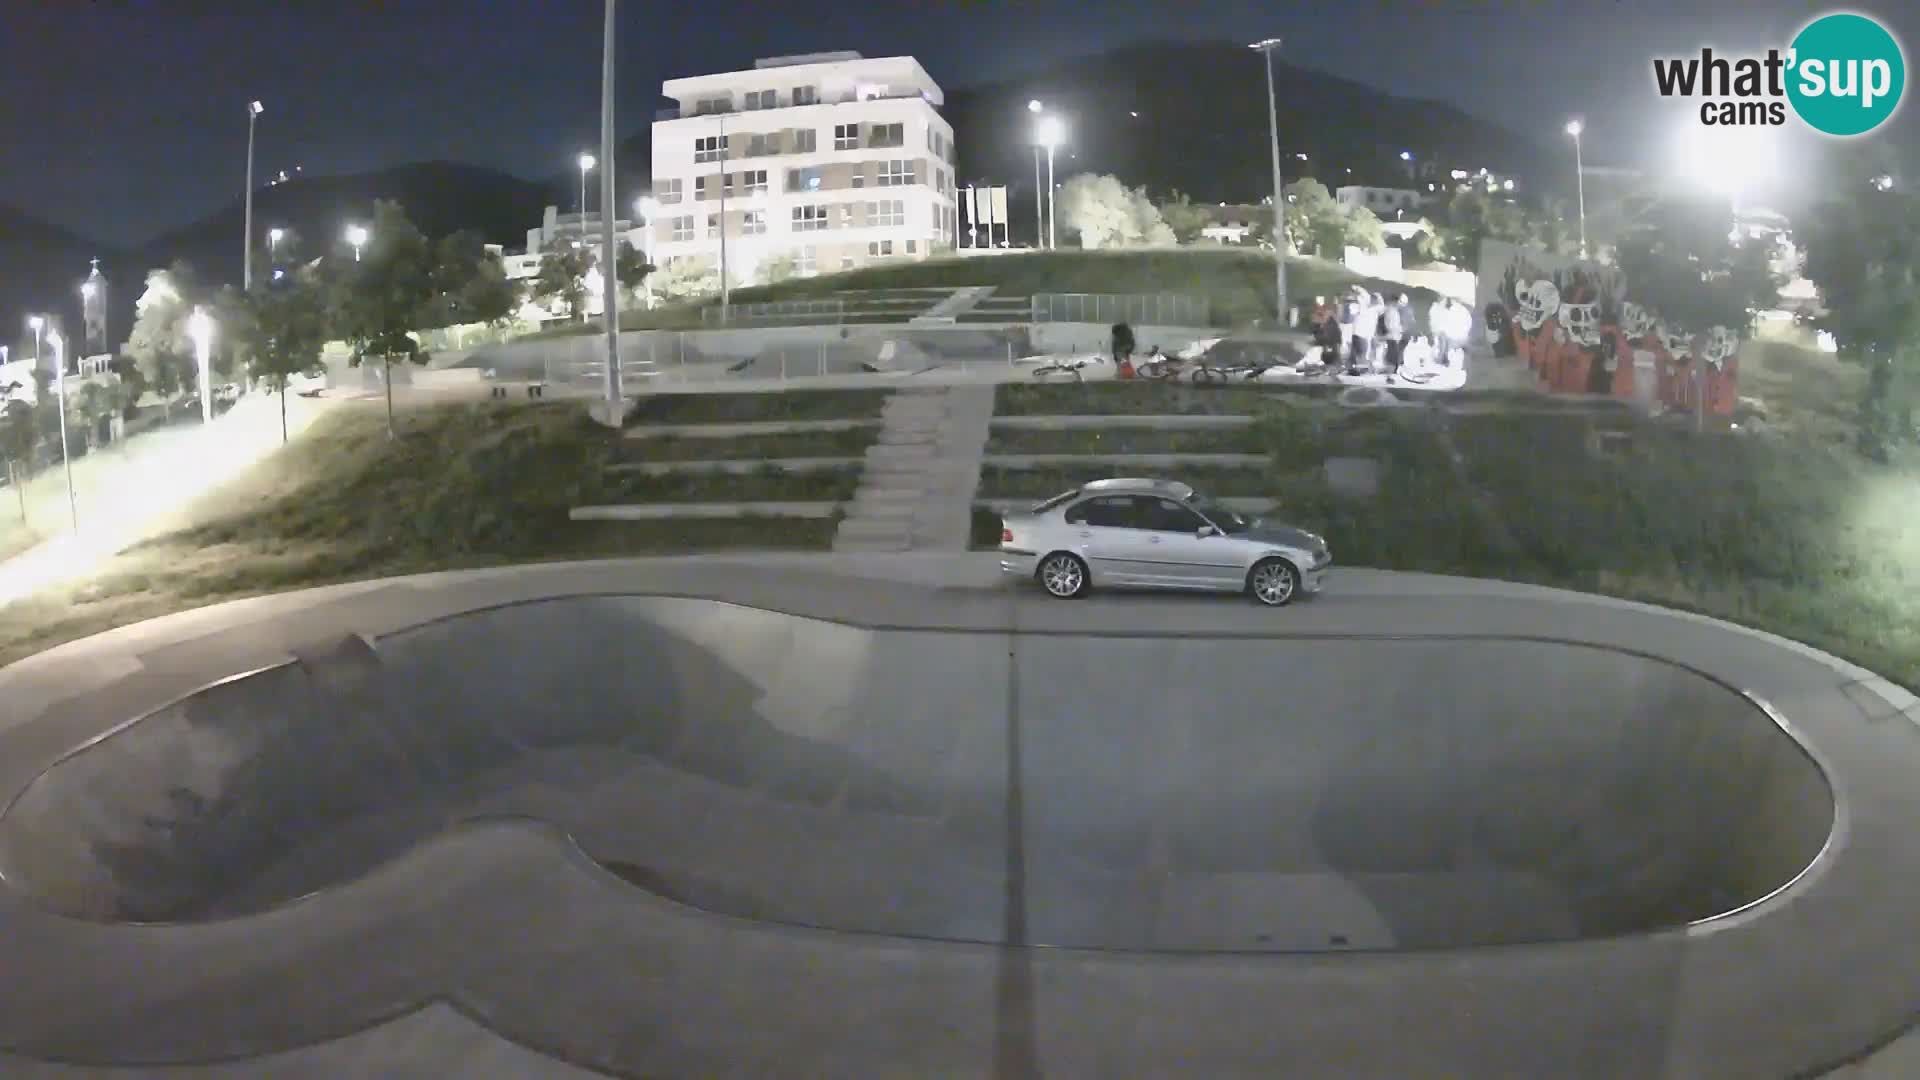 Skate park webcam Nova Gorica – Slowenien